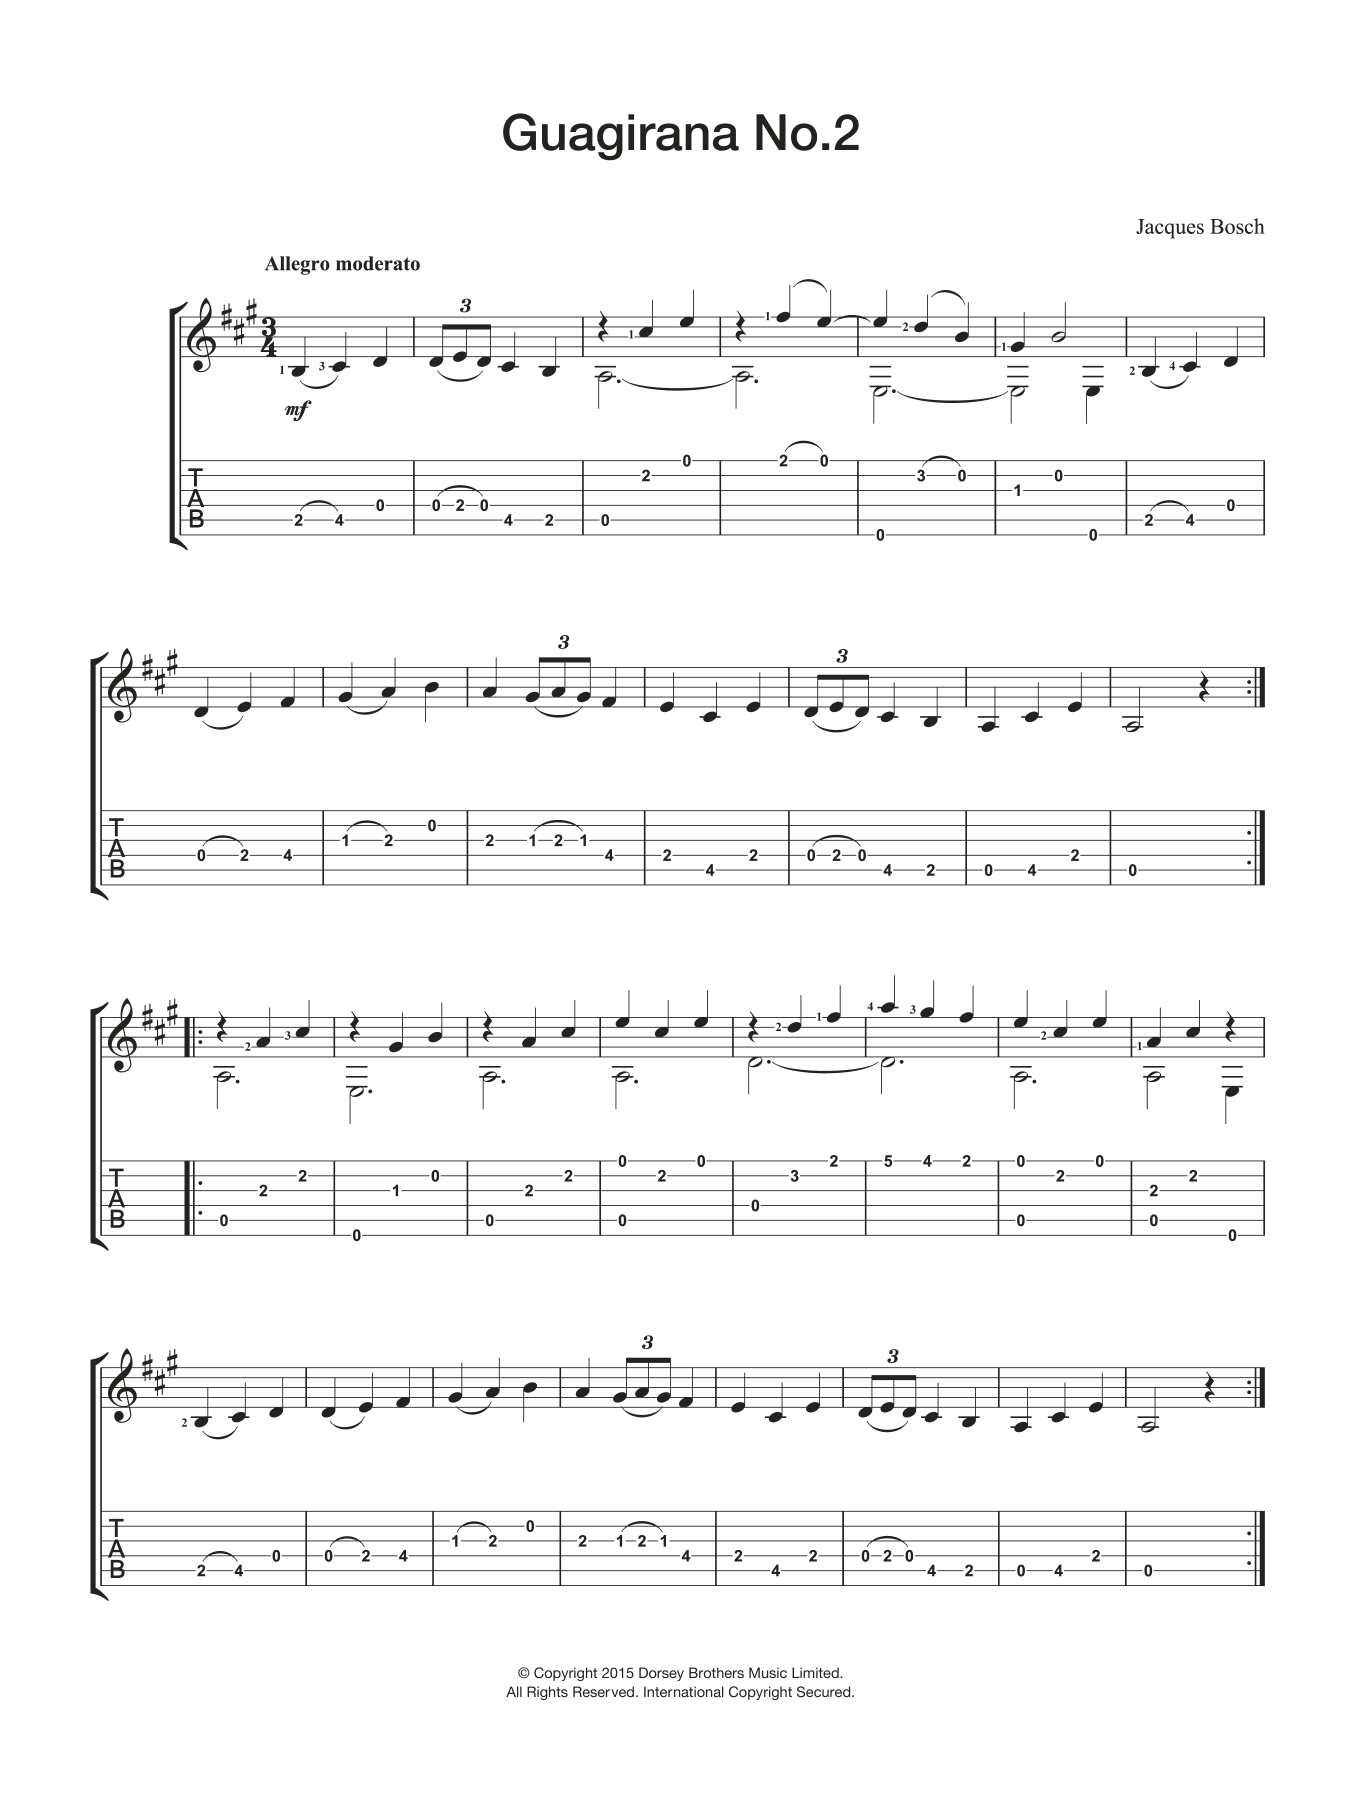 Jacques Bosch Guagirana No. 2 Sheet Music Notes & Chords for Guitar - Download or Print PDF